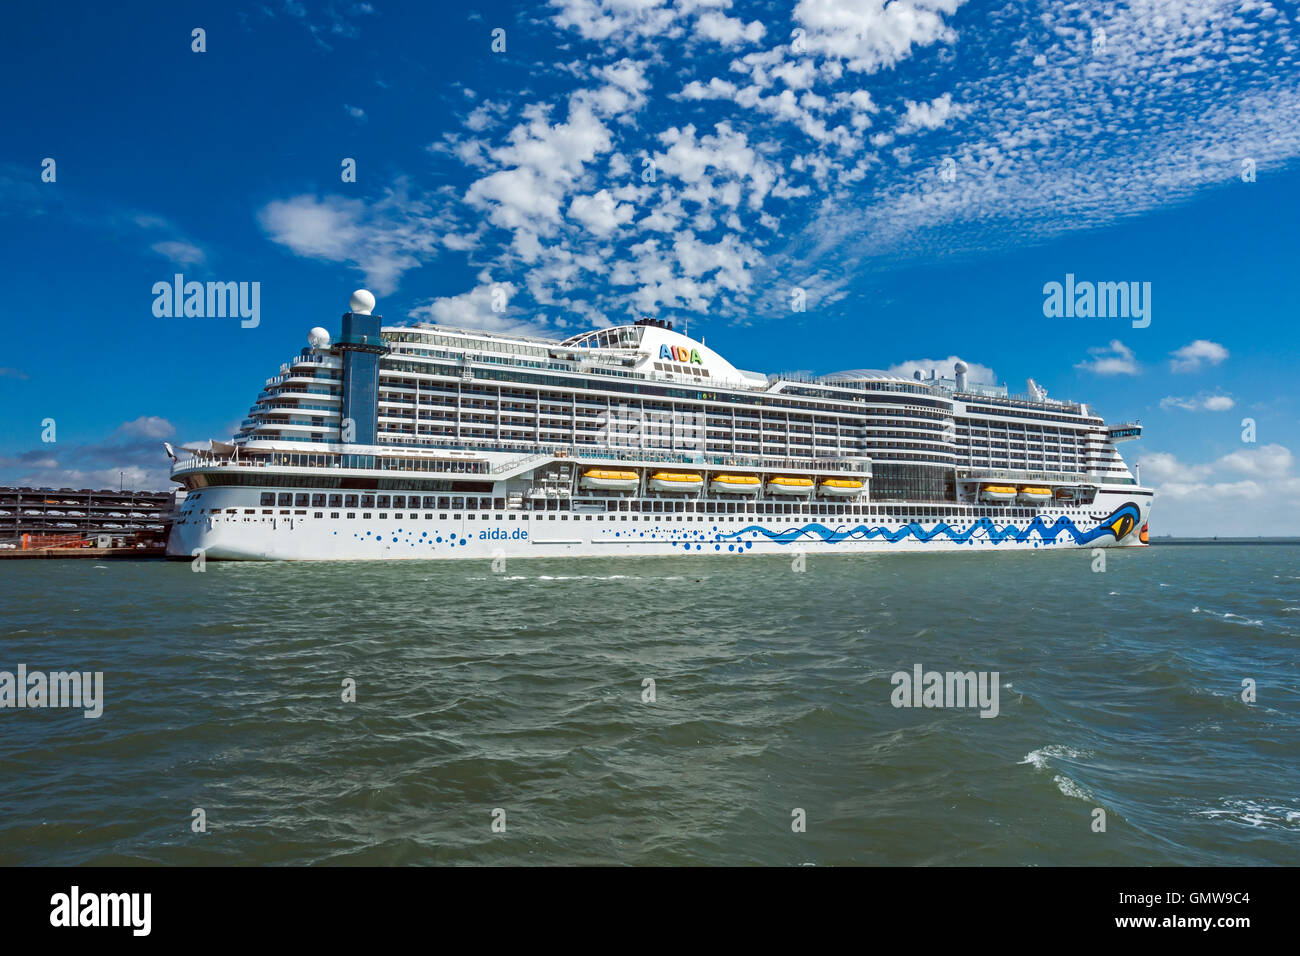 Large cruise ship Aida Prima moored in port of Southampton England Stock Photo